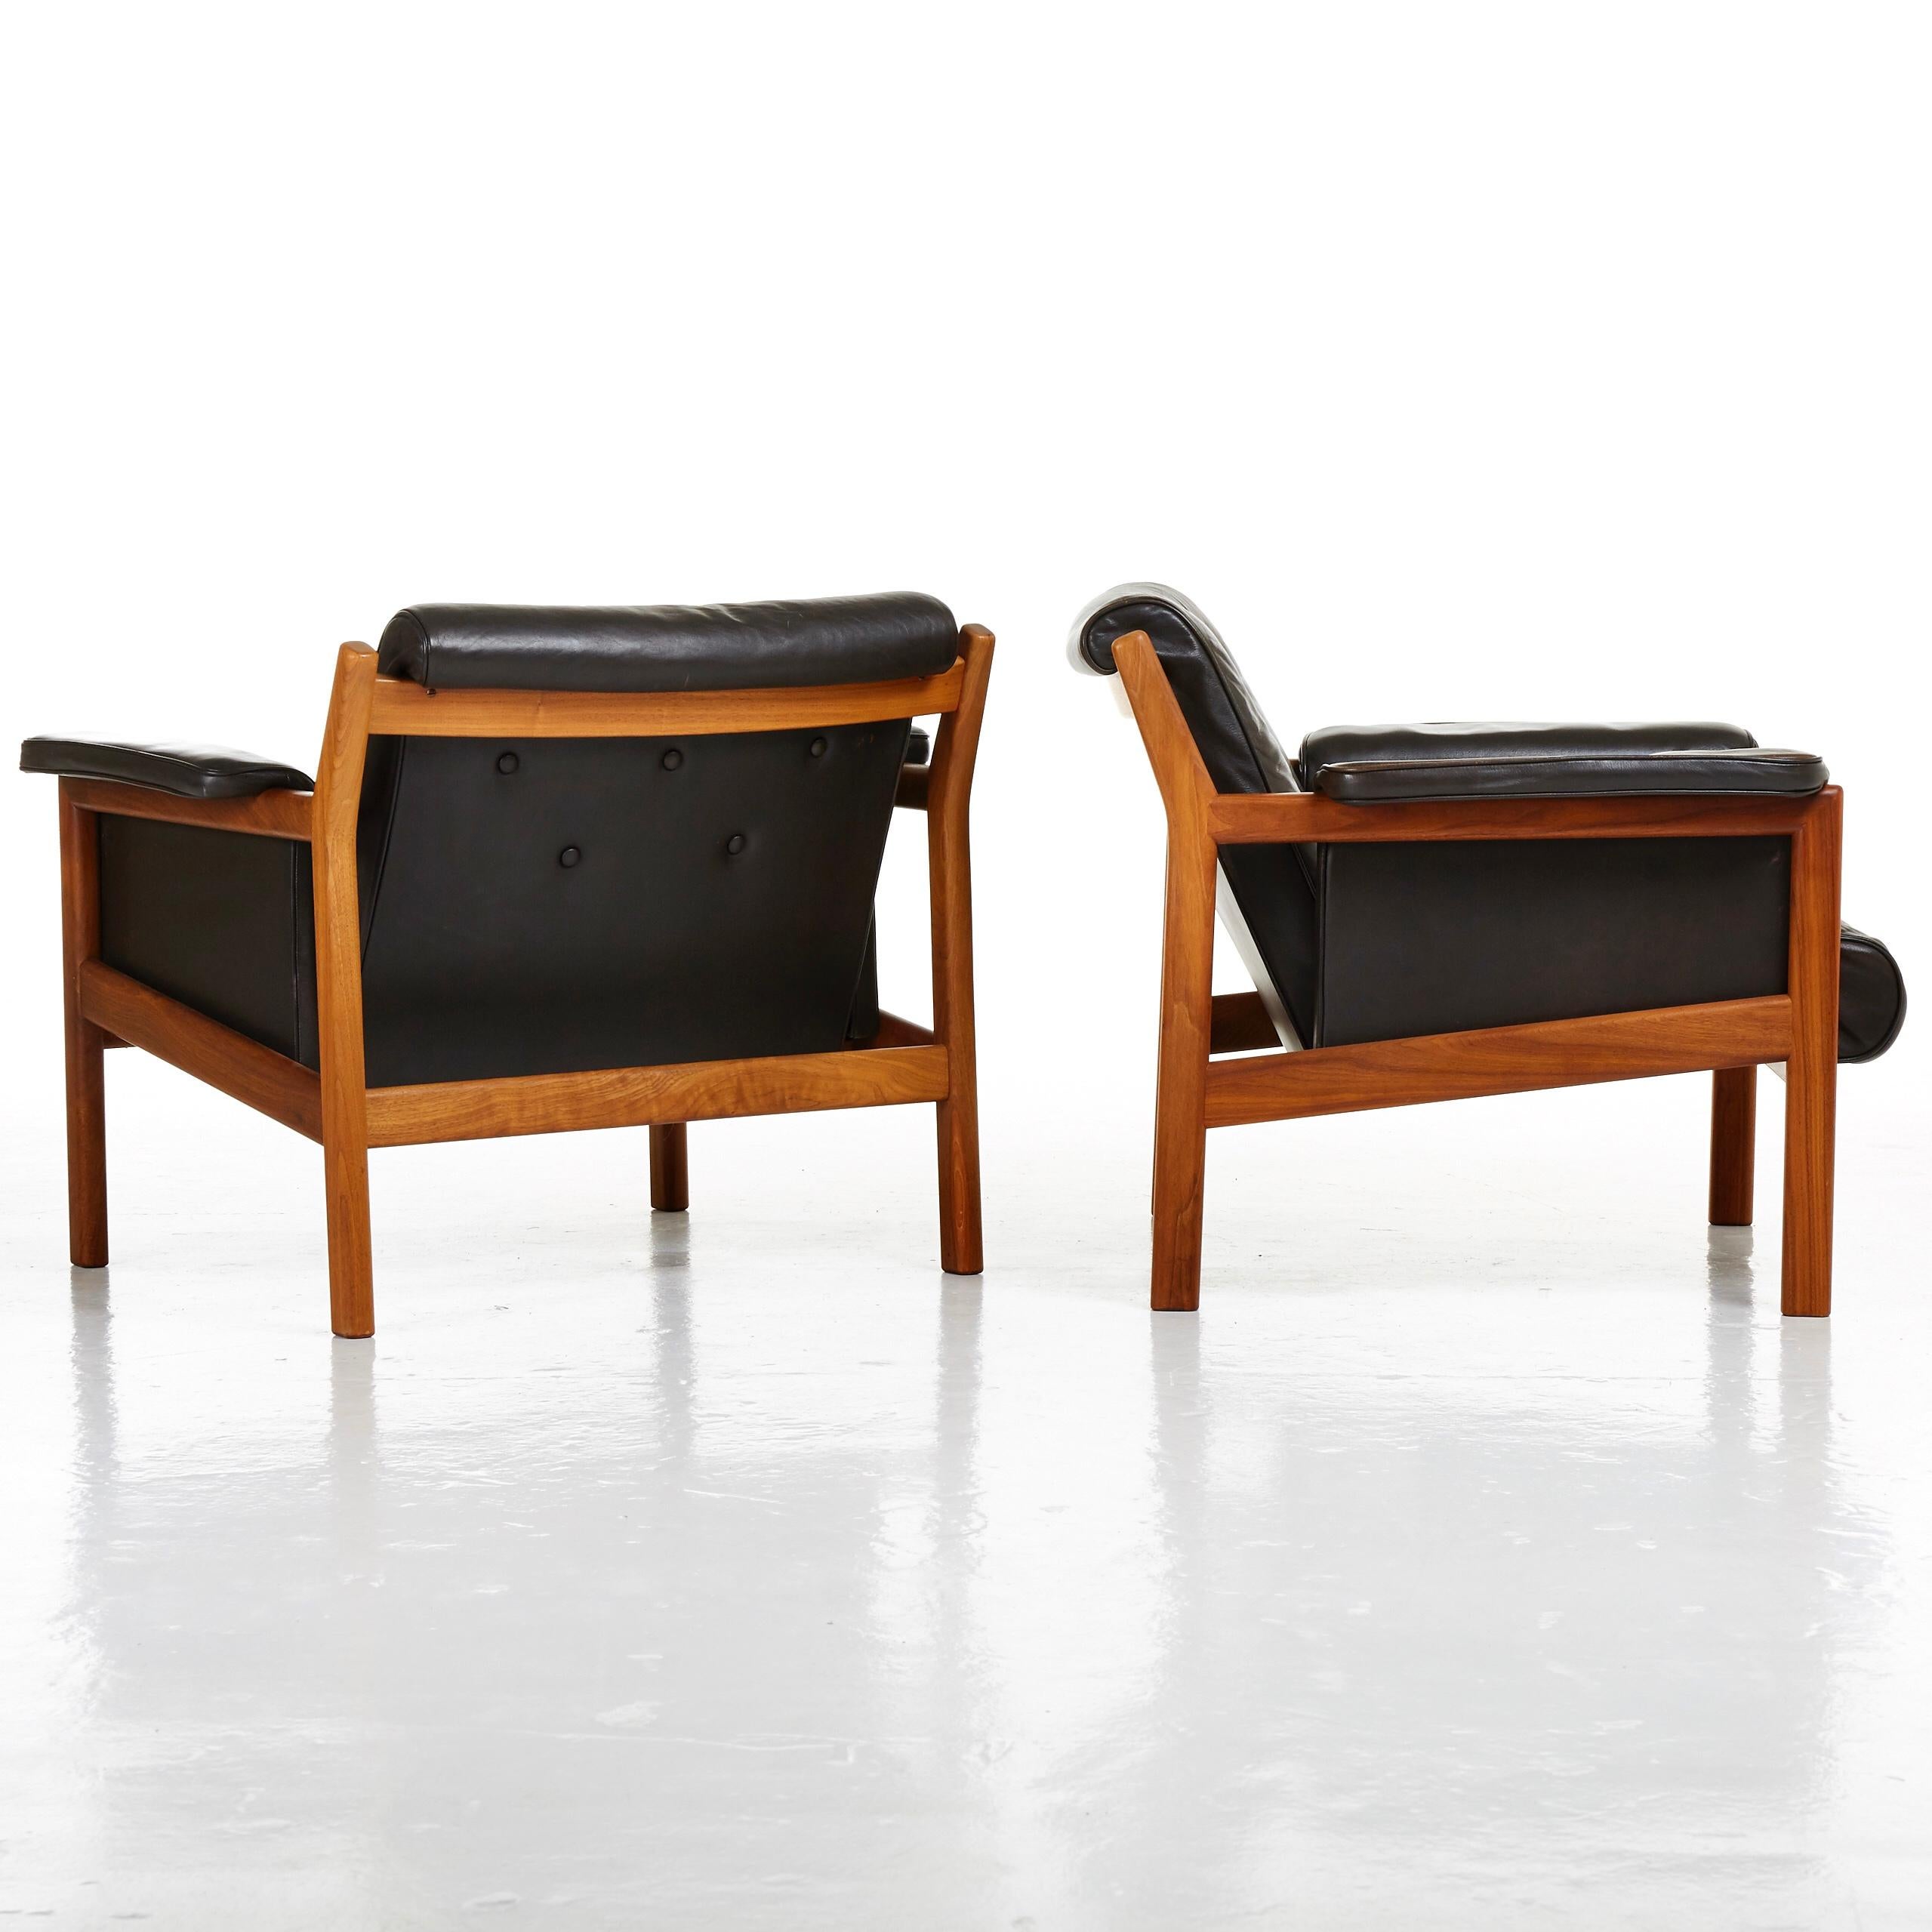 Pair of easy chairs designed by Karl-Erik Ekselius, made in solid teak wood and leather. Produced by JOC in Vetlanda, Sweden in 1960s.